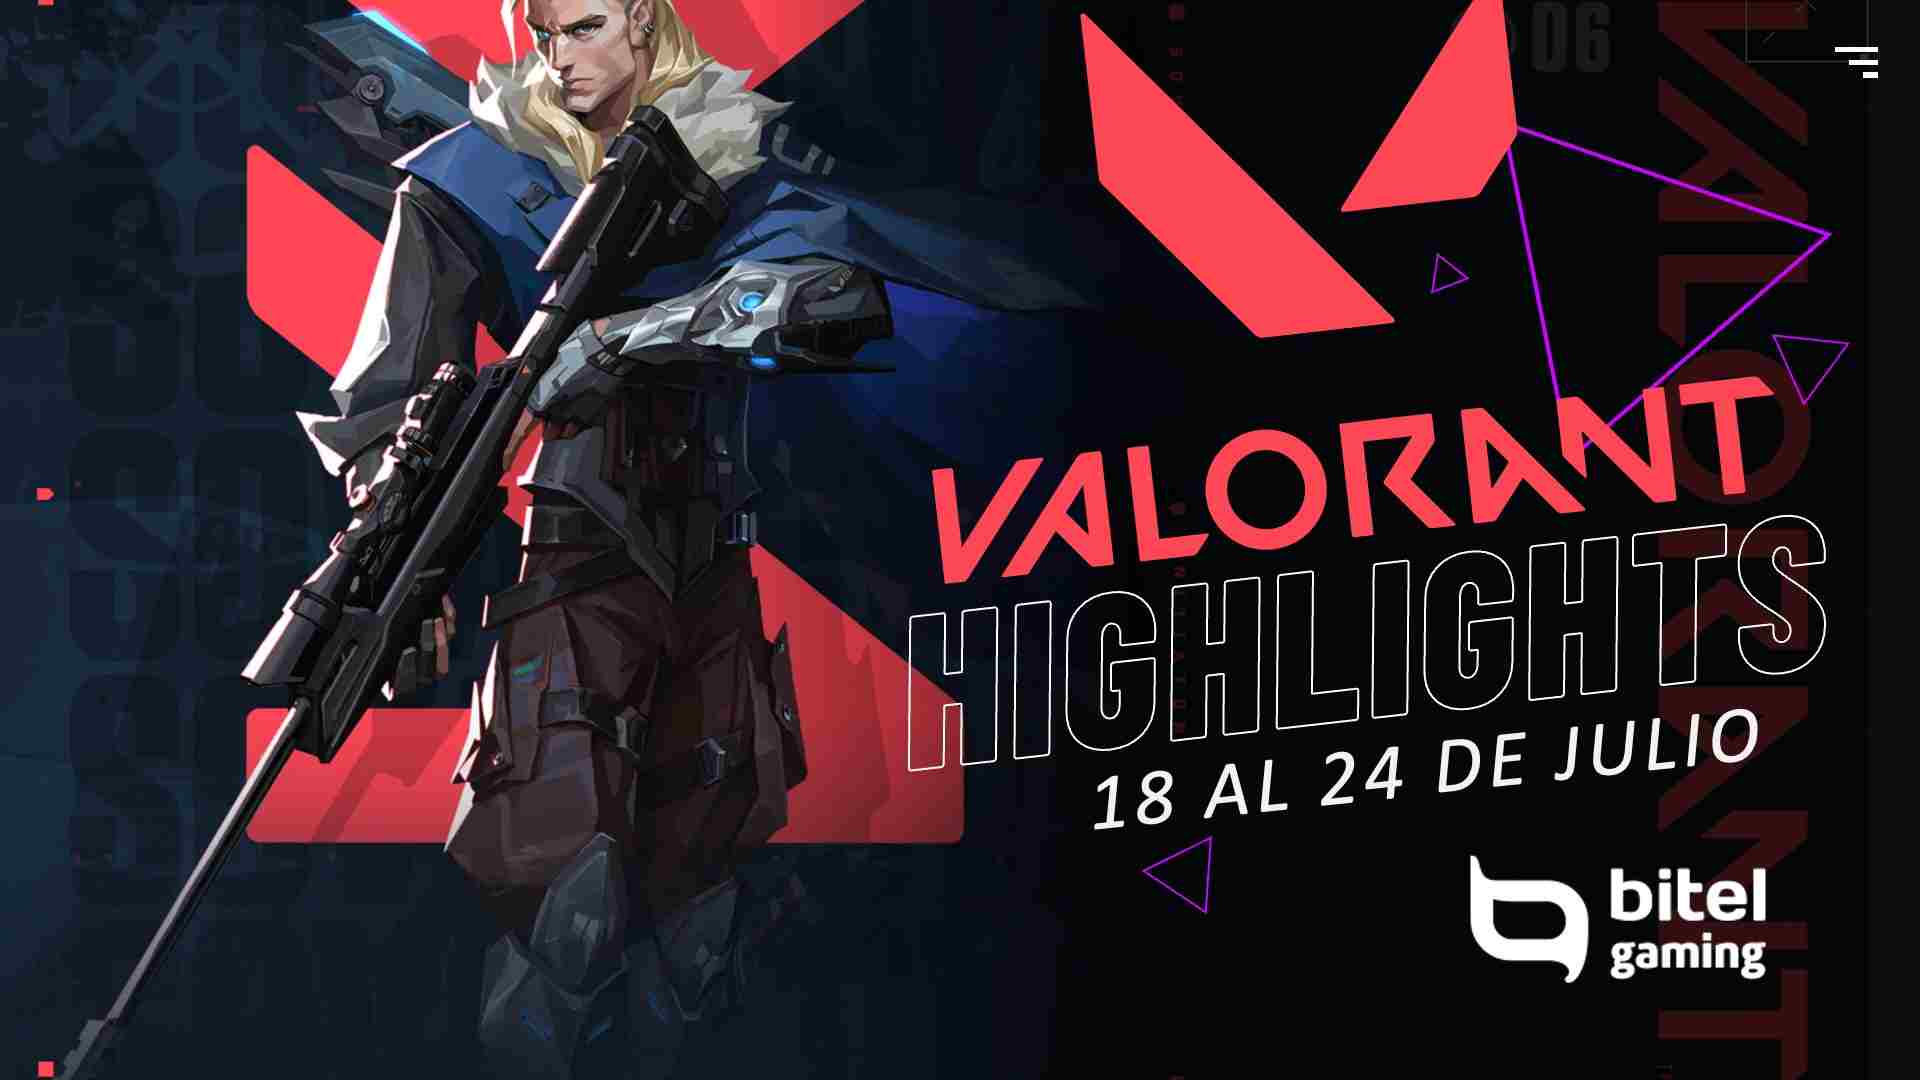 Valorant Highlights - 18 al 24 de Julio